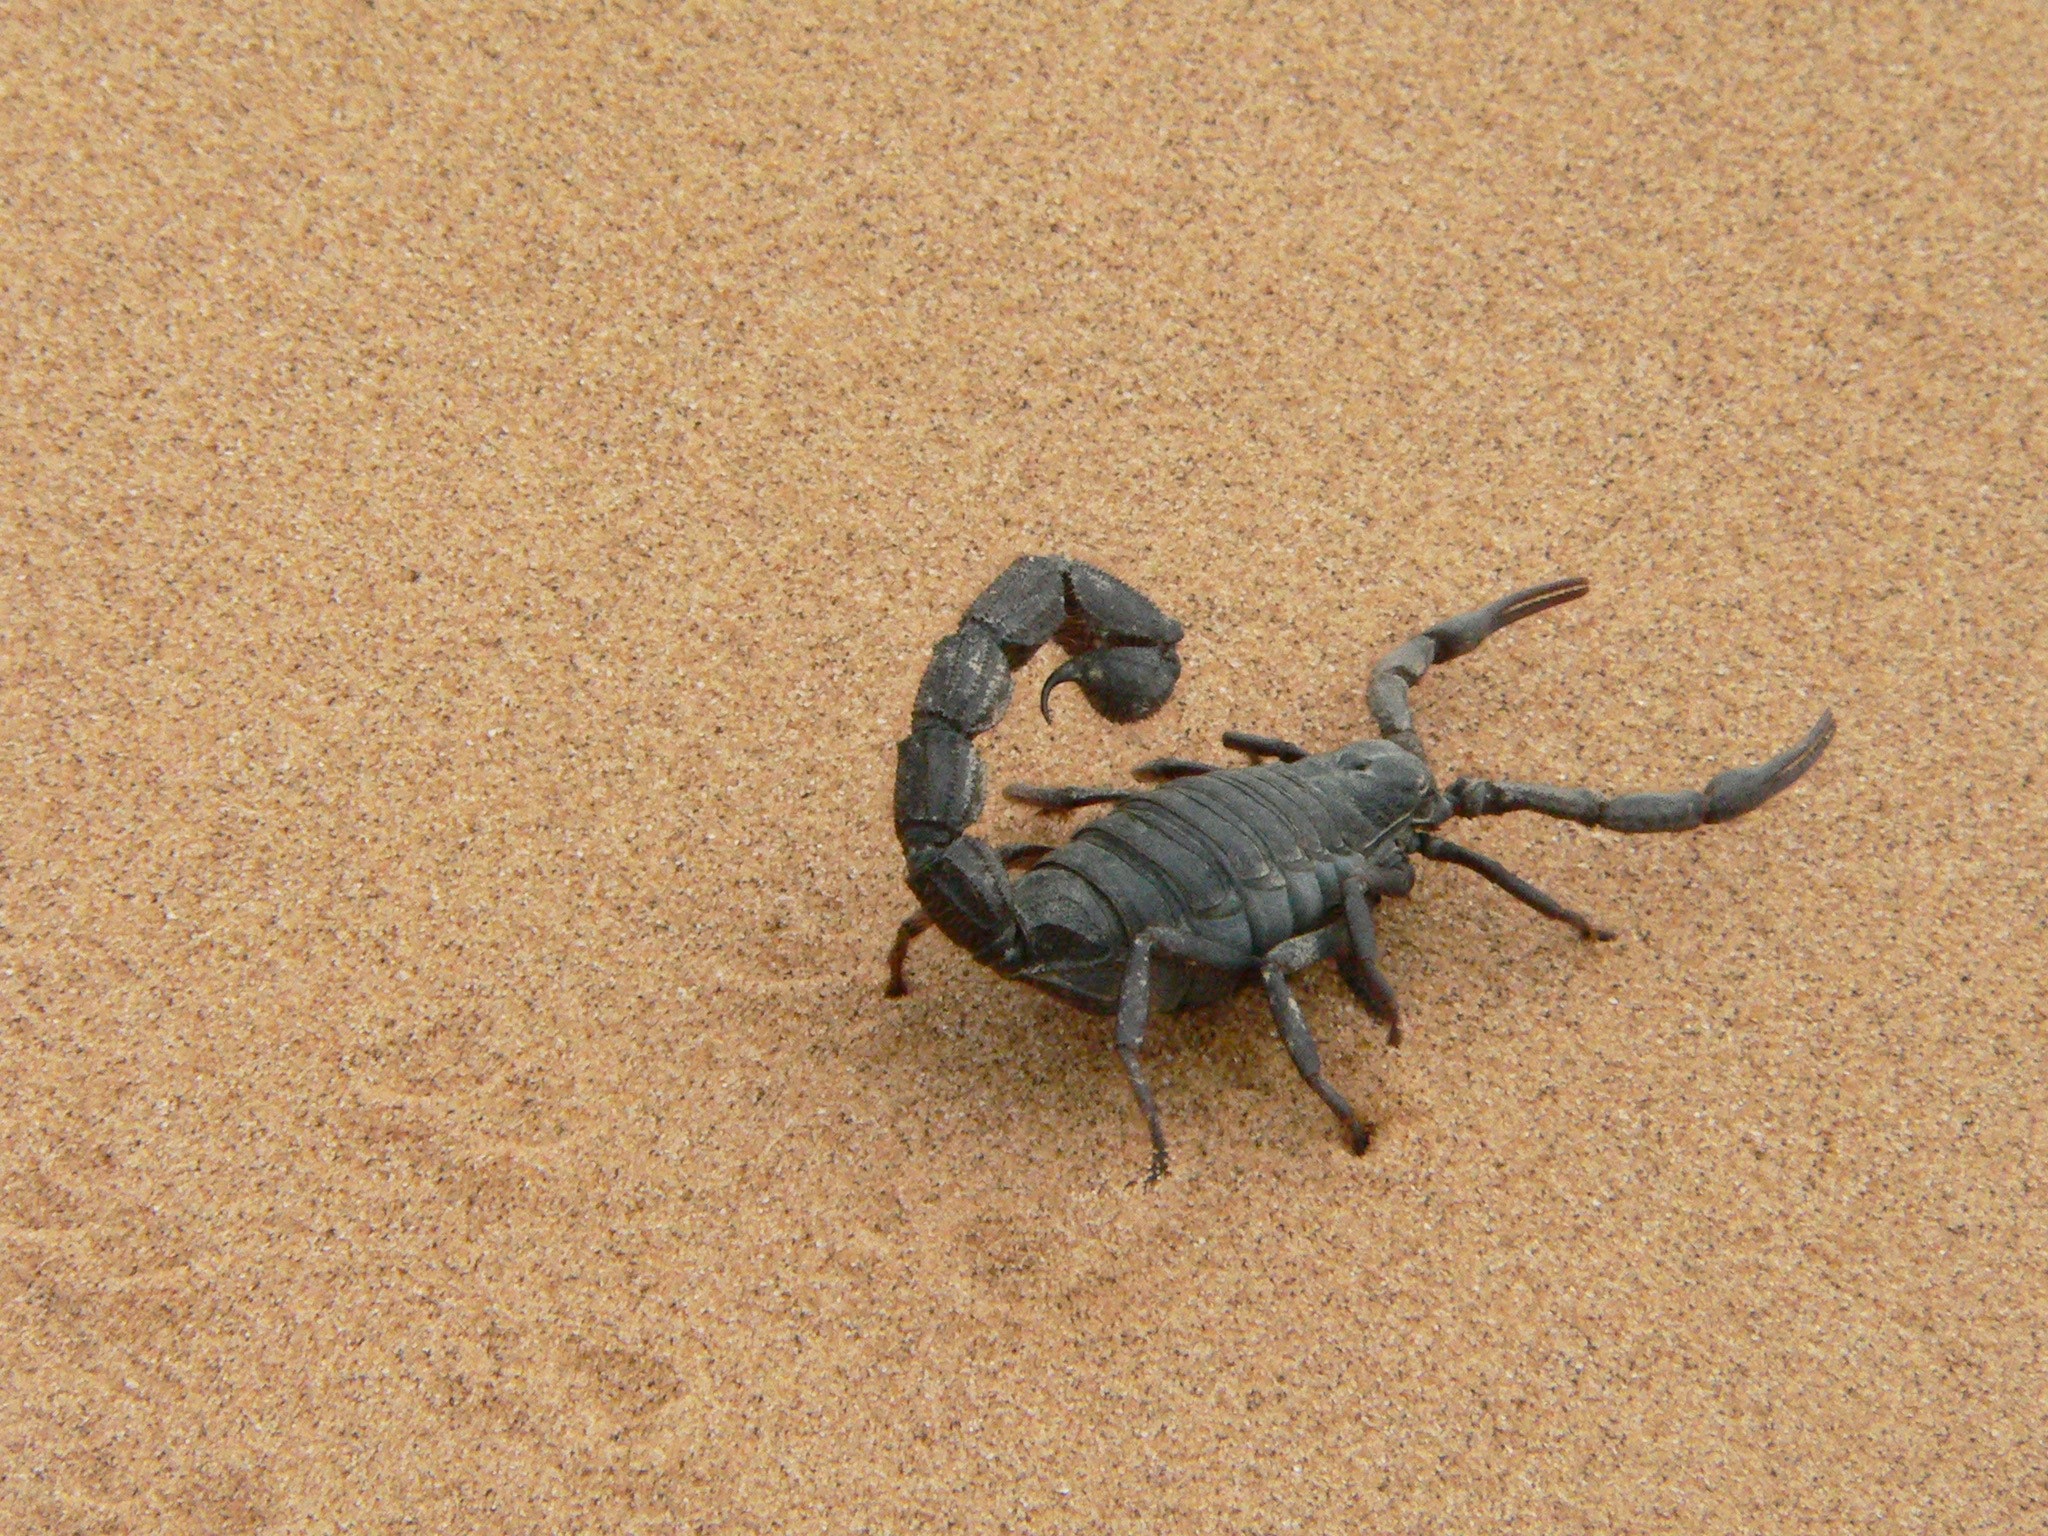 black scorpion on brown sand, giant scorpion, namibia, dry, sting